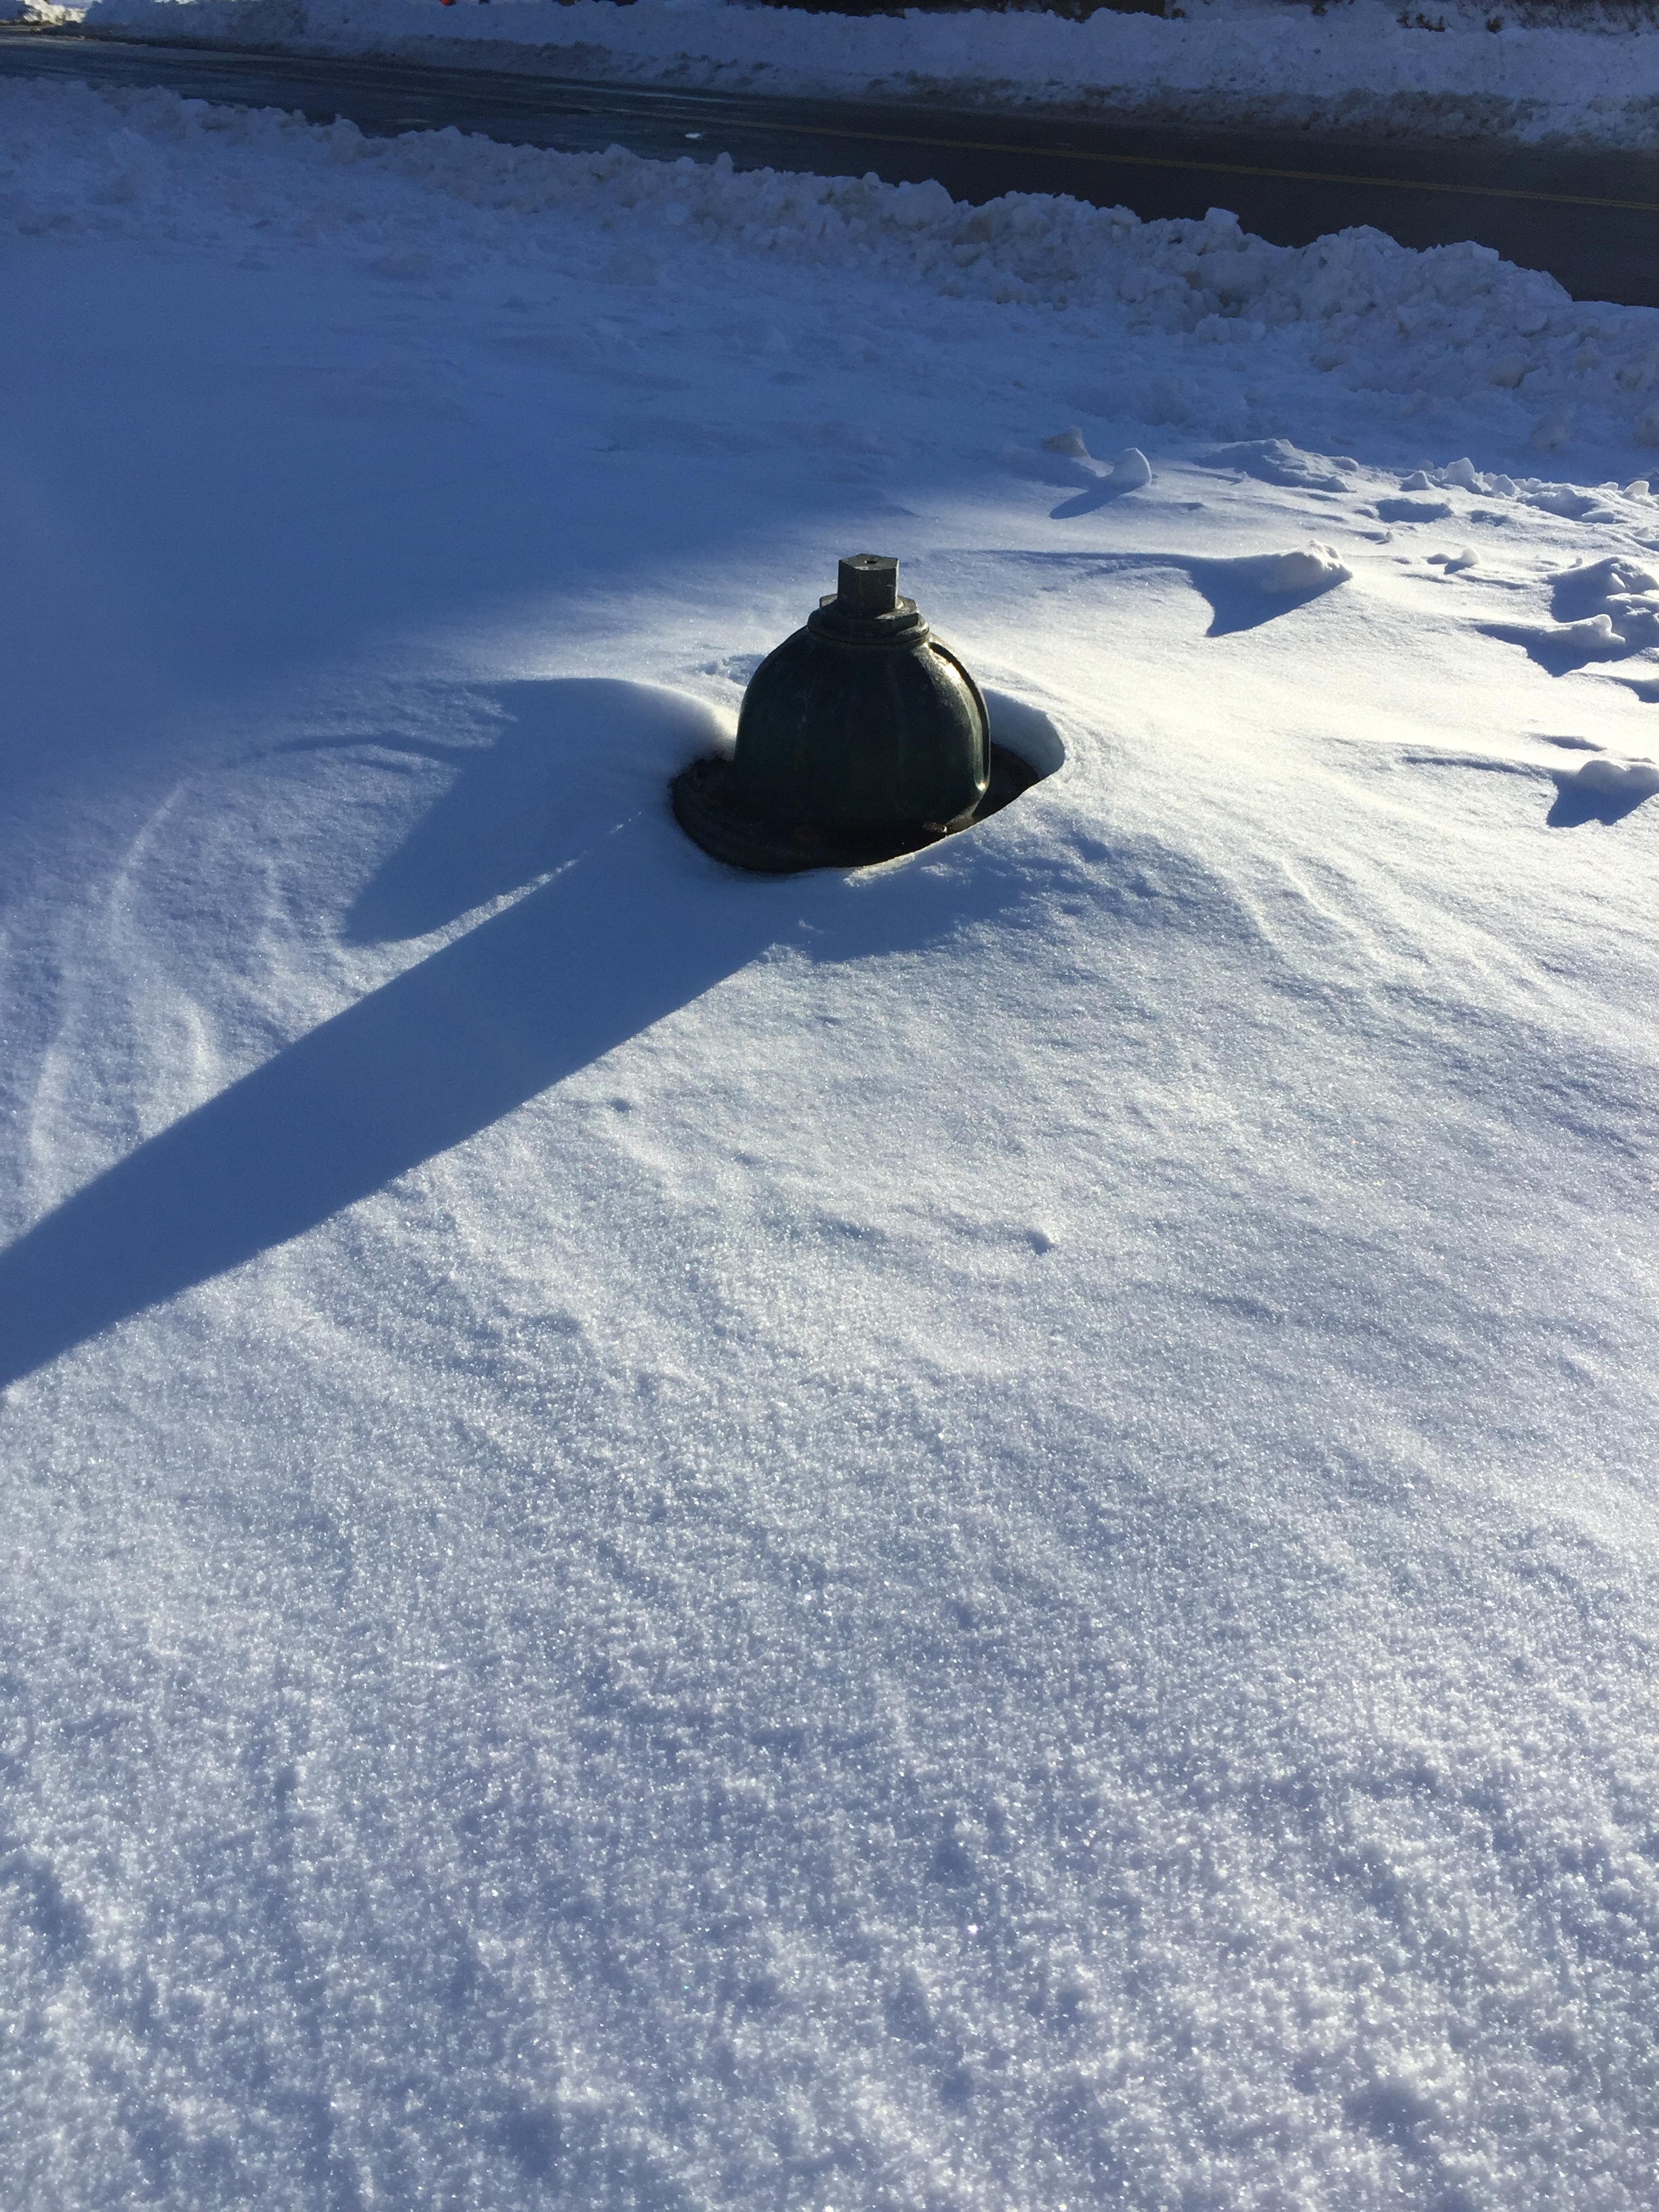 Fire Hydrant in teh Snow.JPG